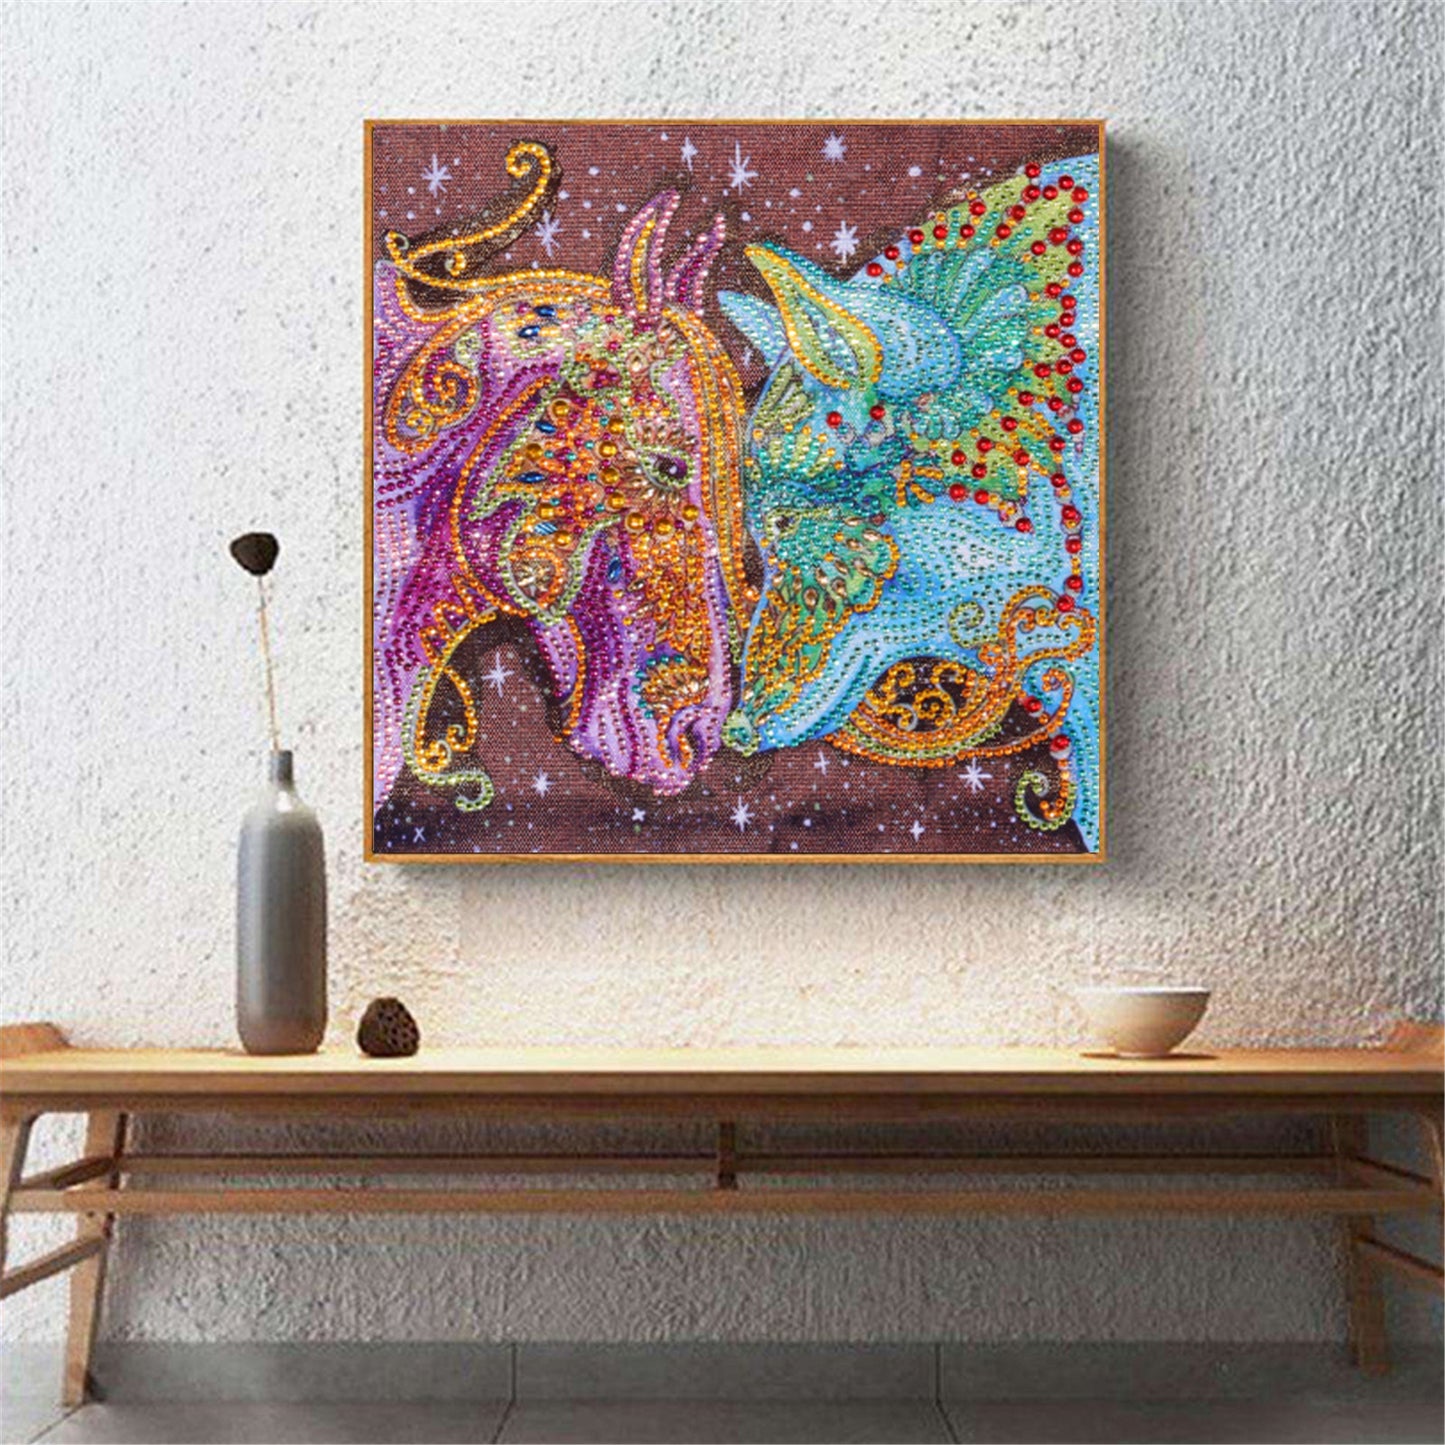 Unicorn 5D DIY Diamond Paint Animals Cross Diamond Embroidery Paint Home Decor